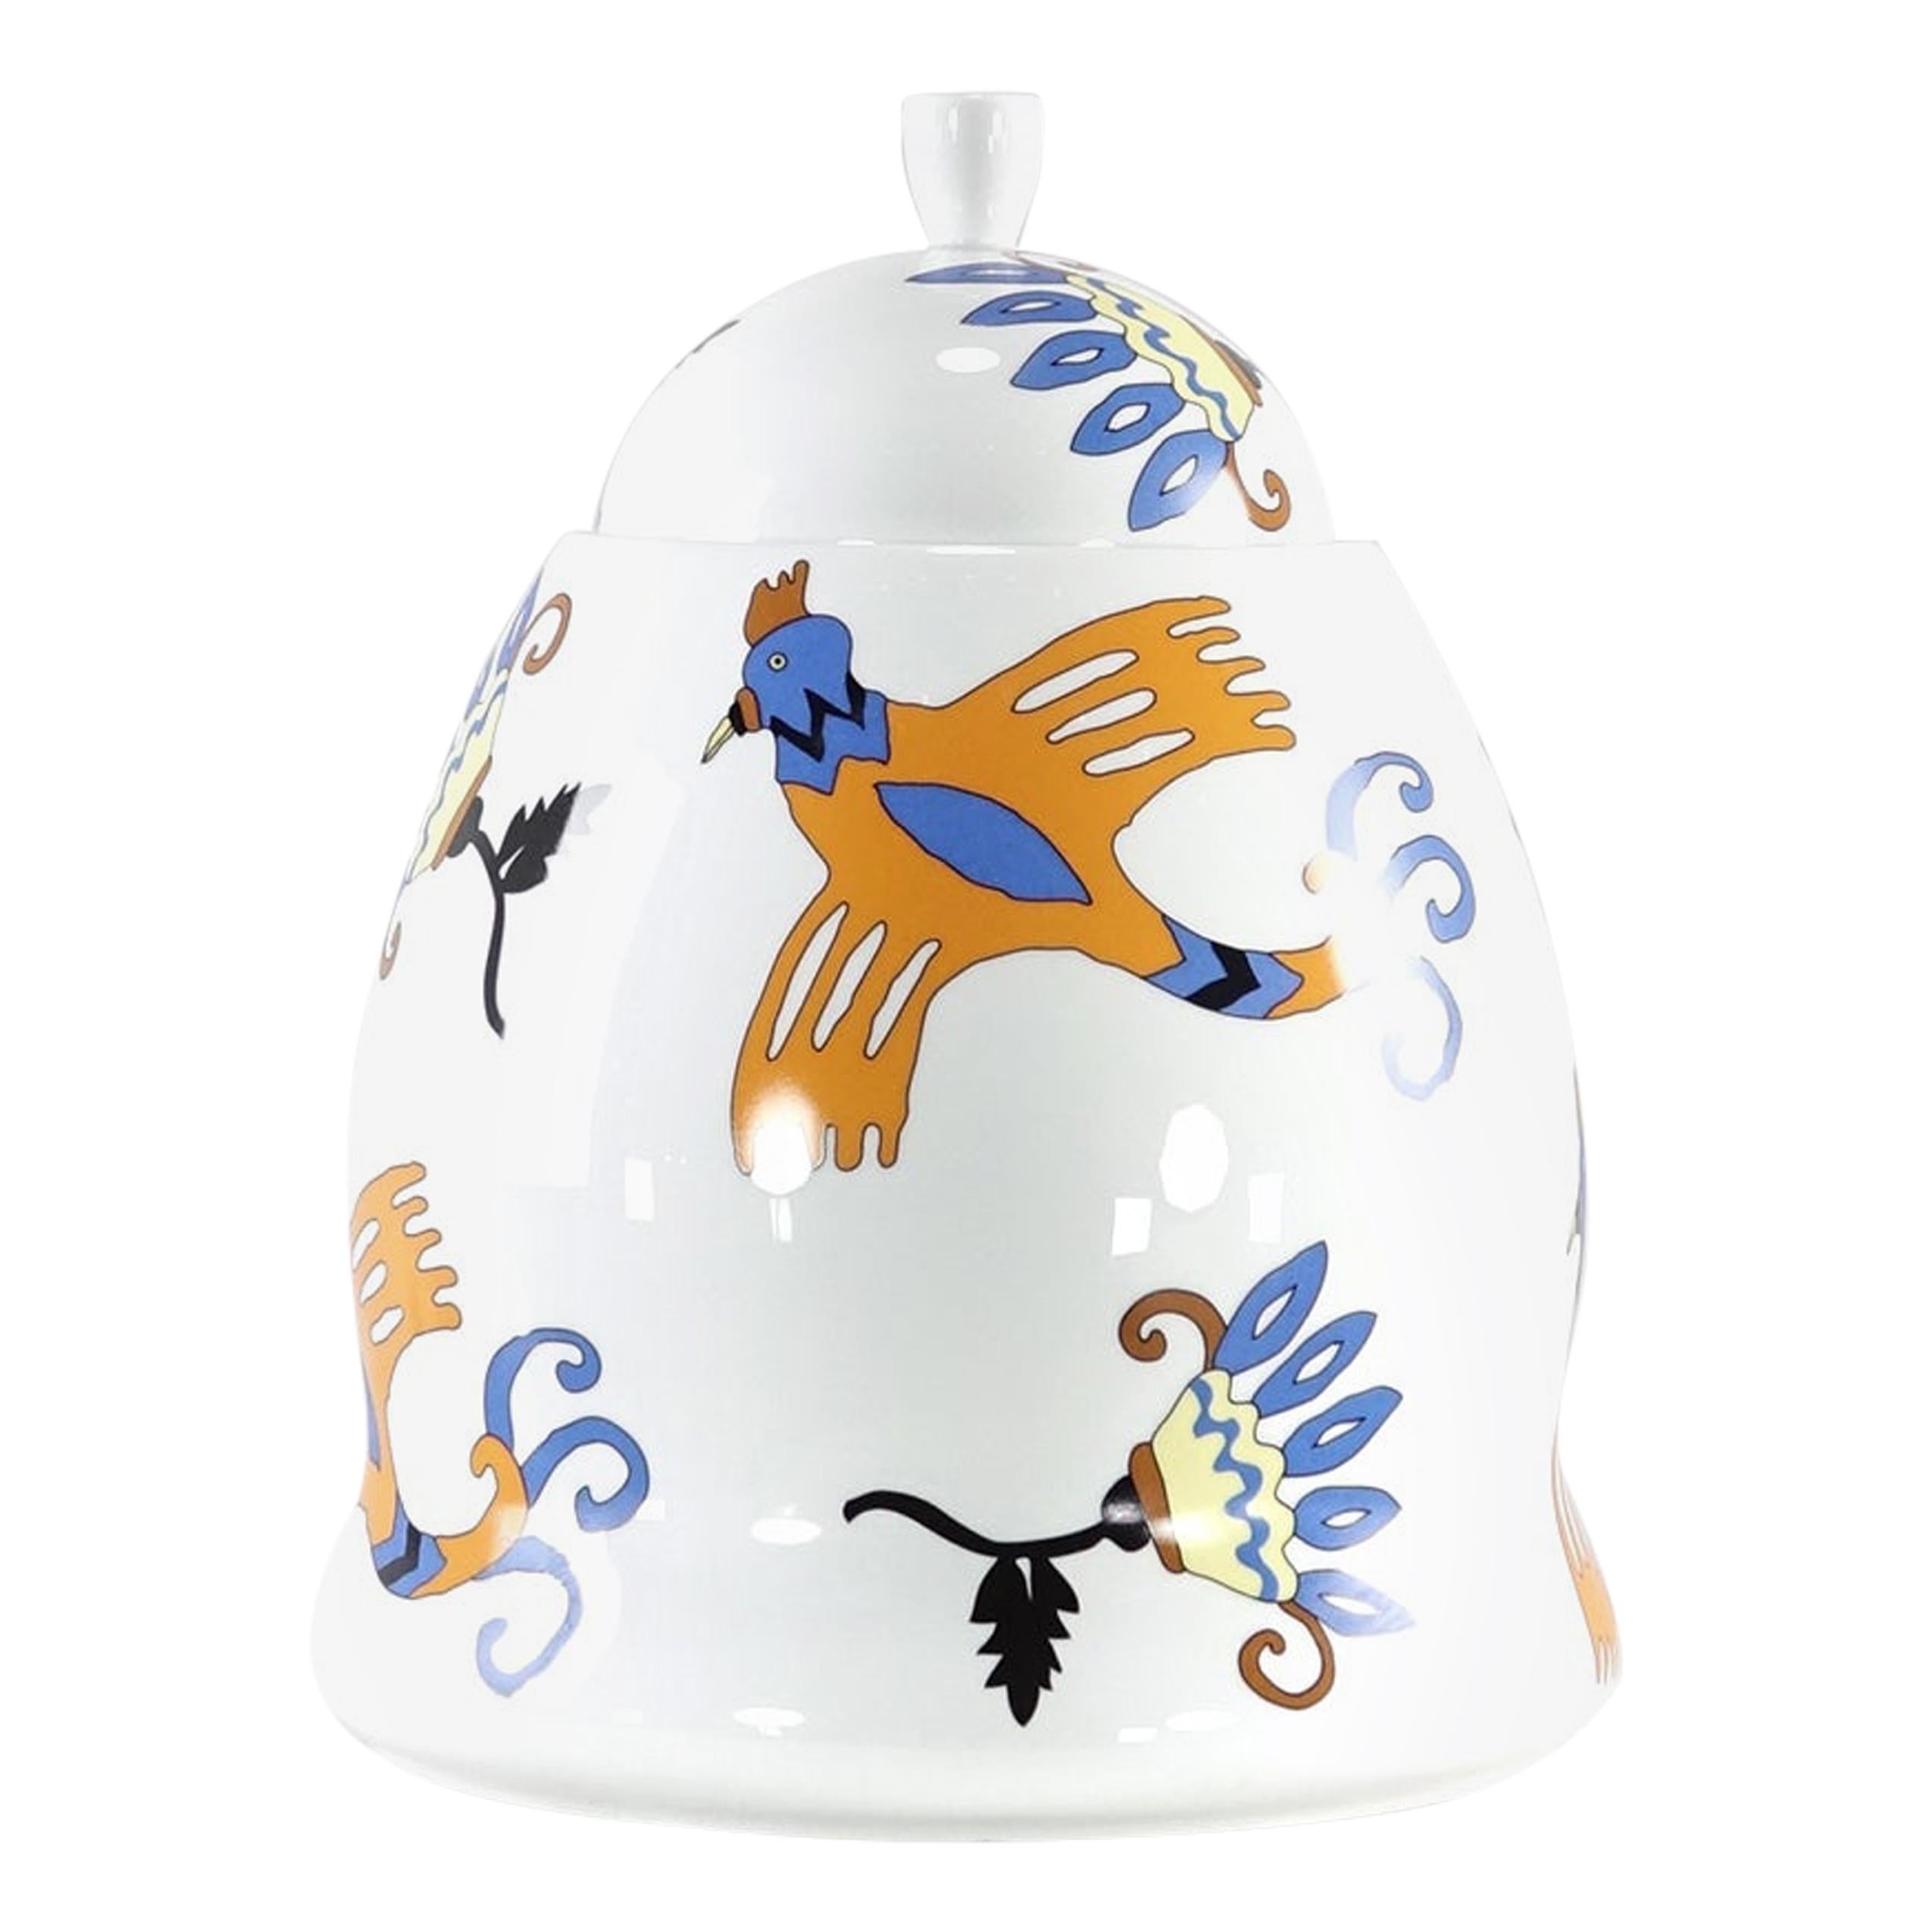 Porcelain Centerpiece Alessi Tendentse Design Nathalie du Pasquier & G. Sowden